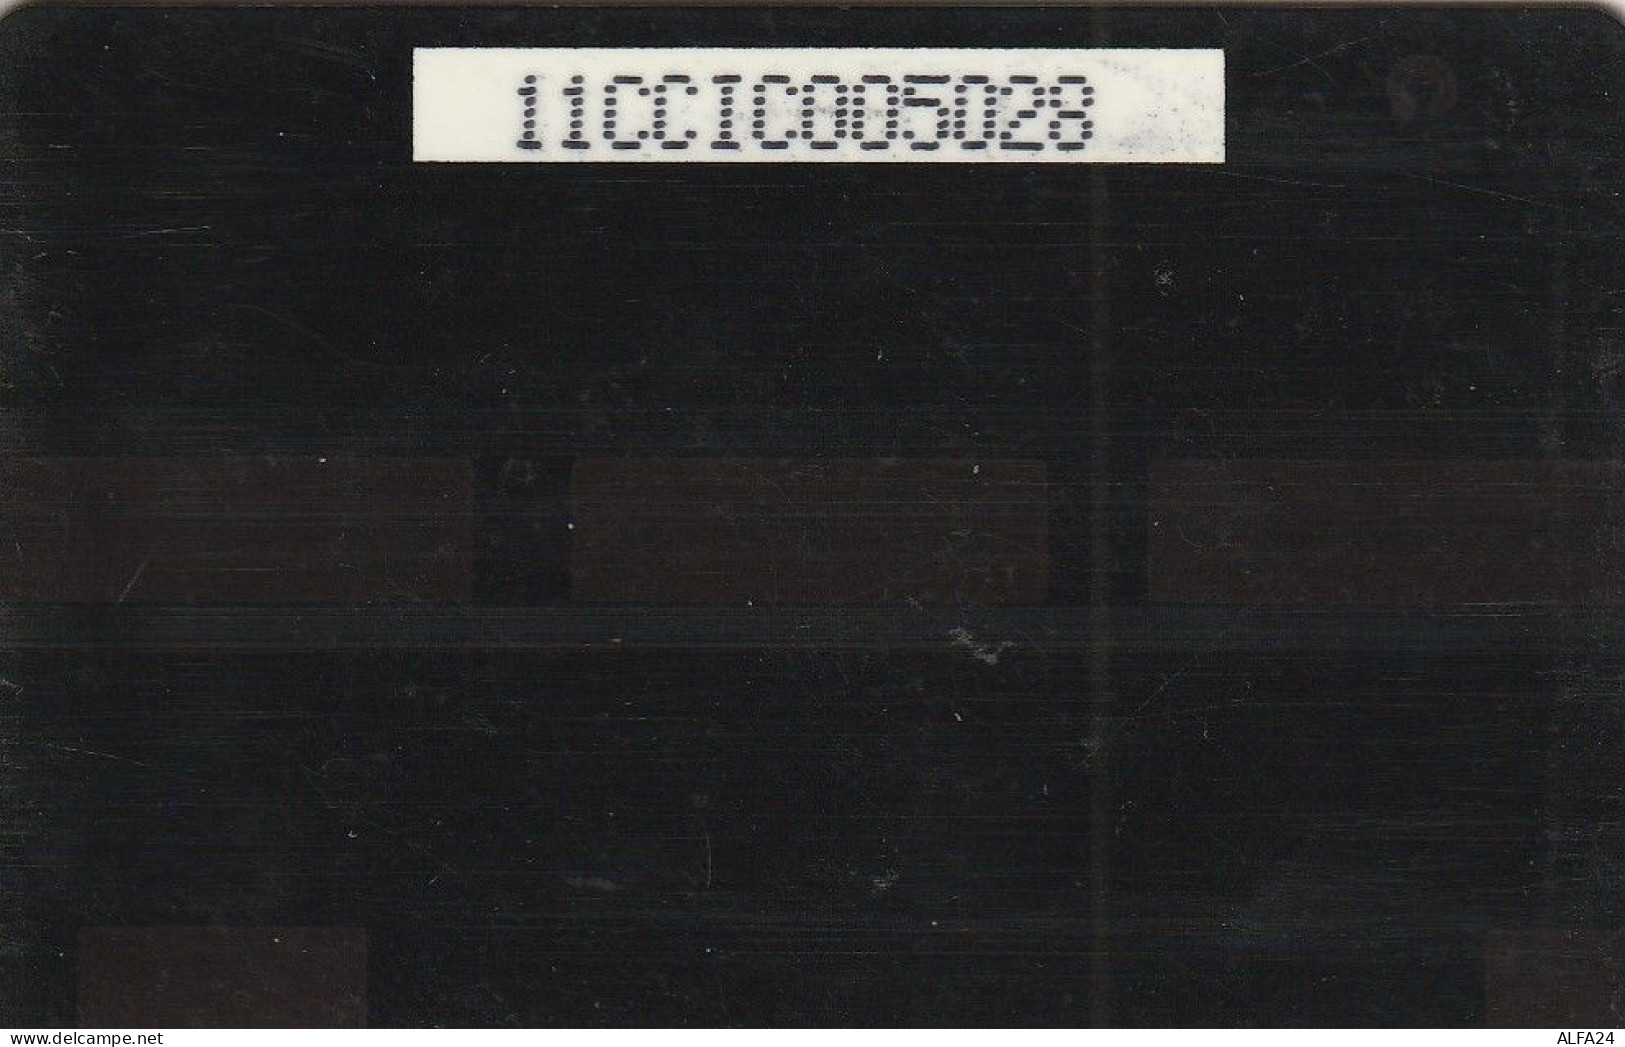 PHONE CARD CAYMAN ISLANDS  (E49.51.7 - Kaaimaneilanden